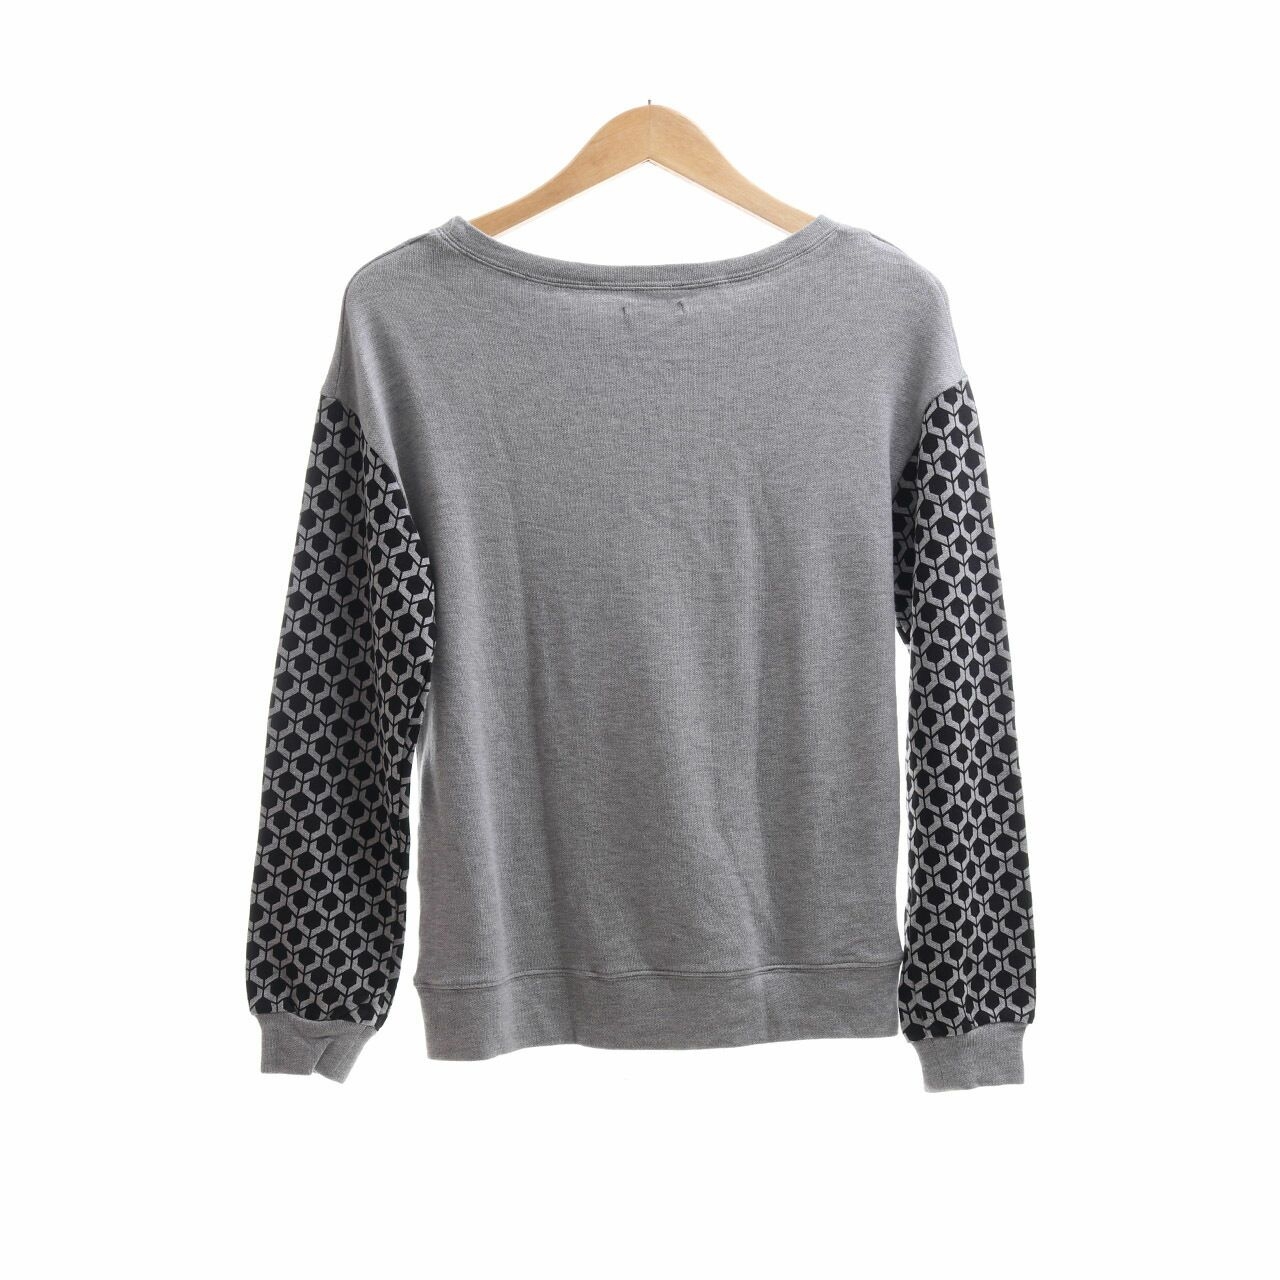 Boite Grey Sweater